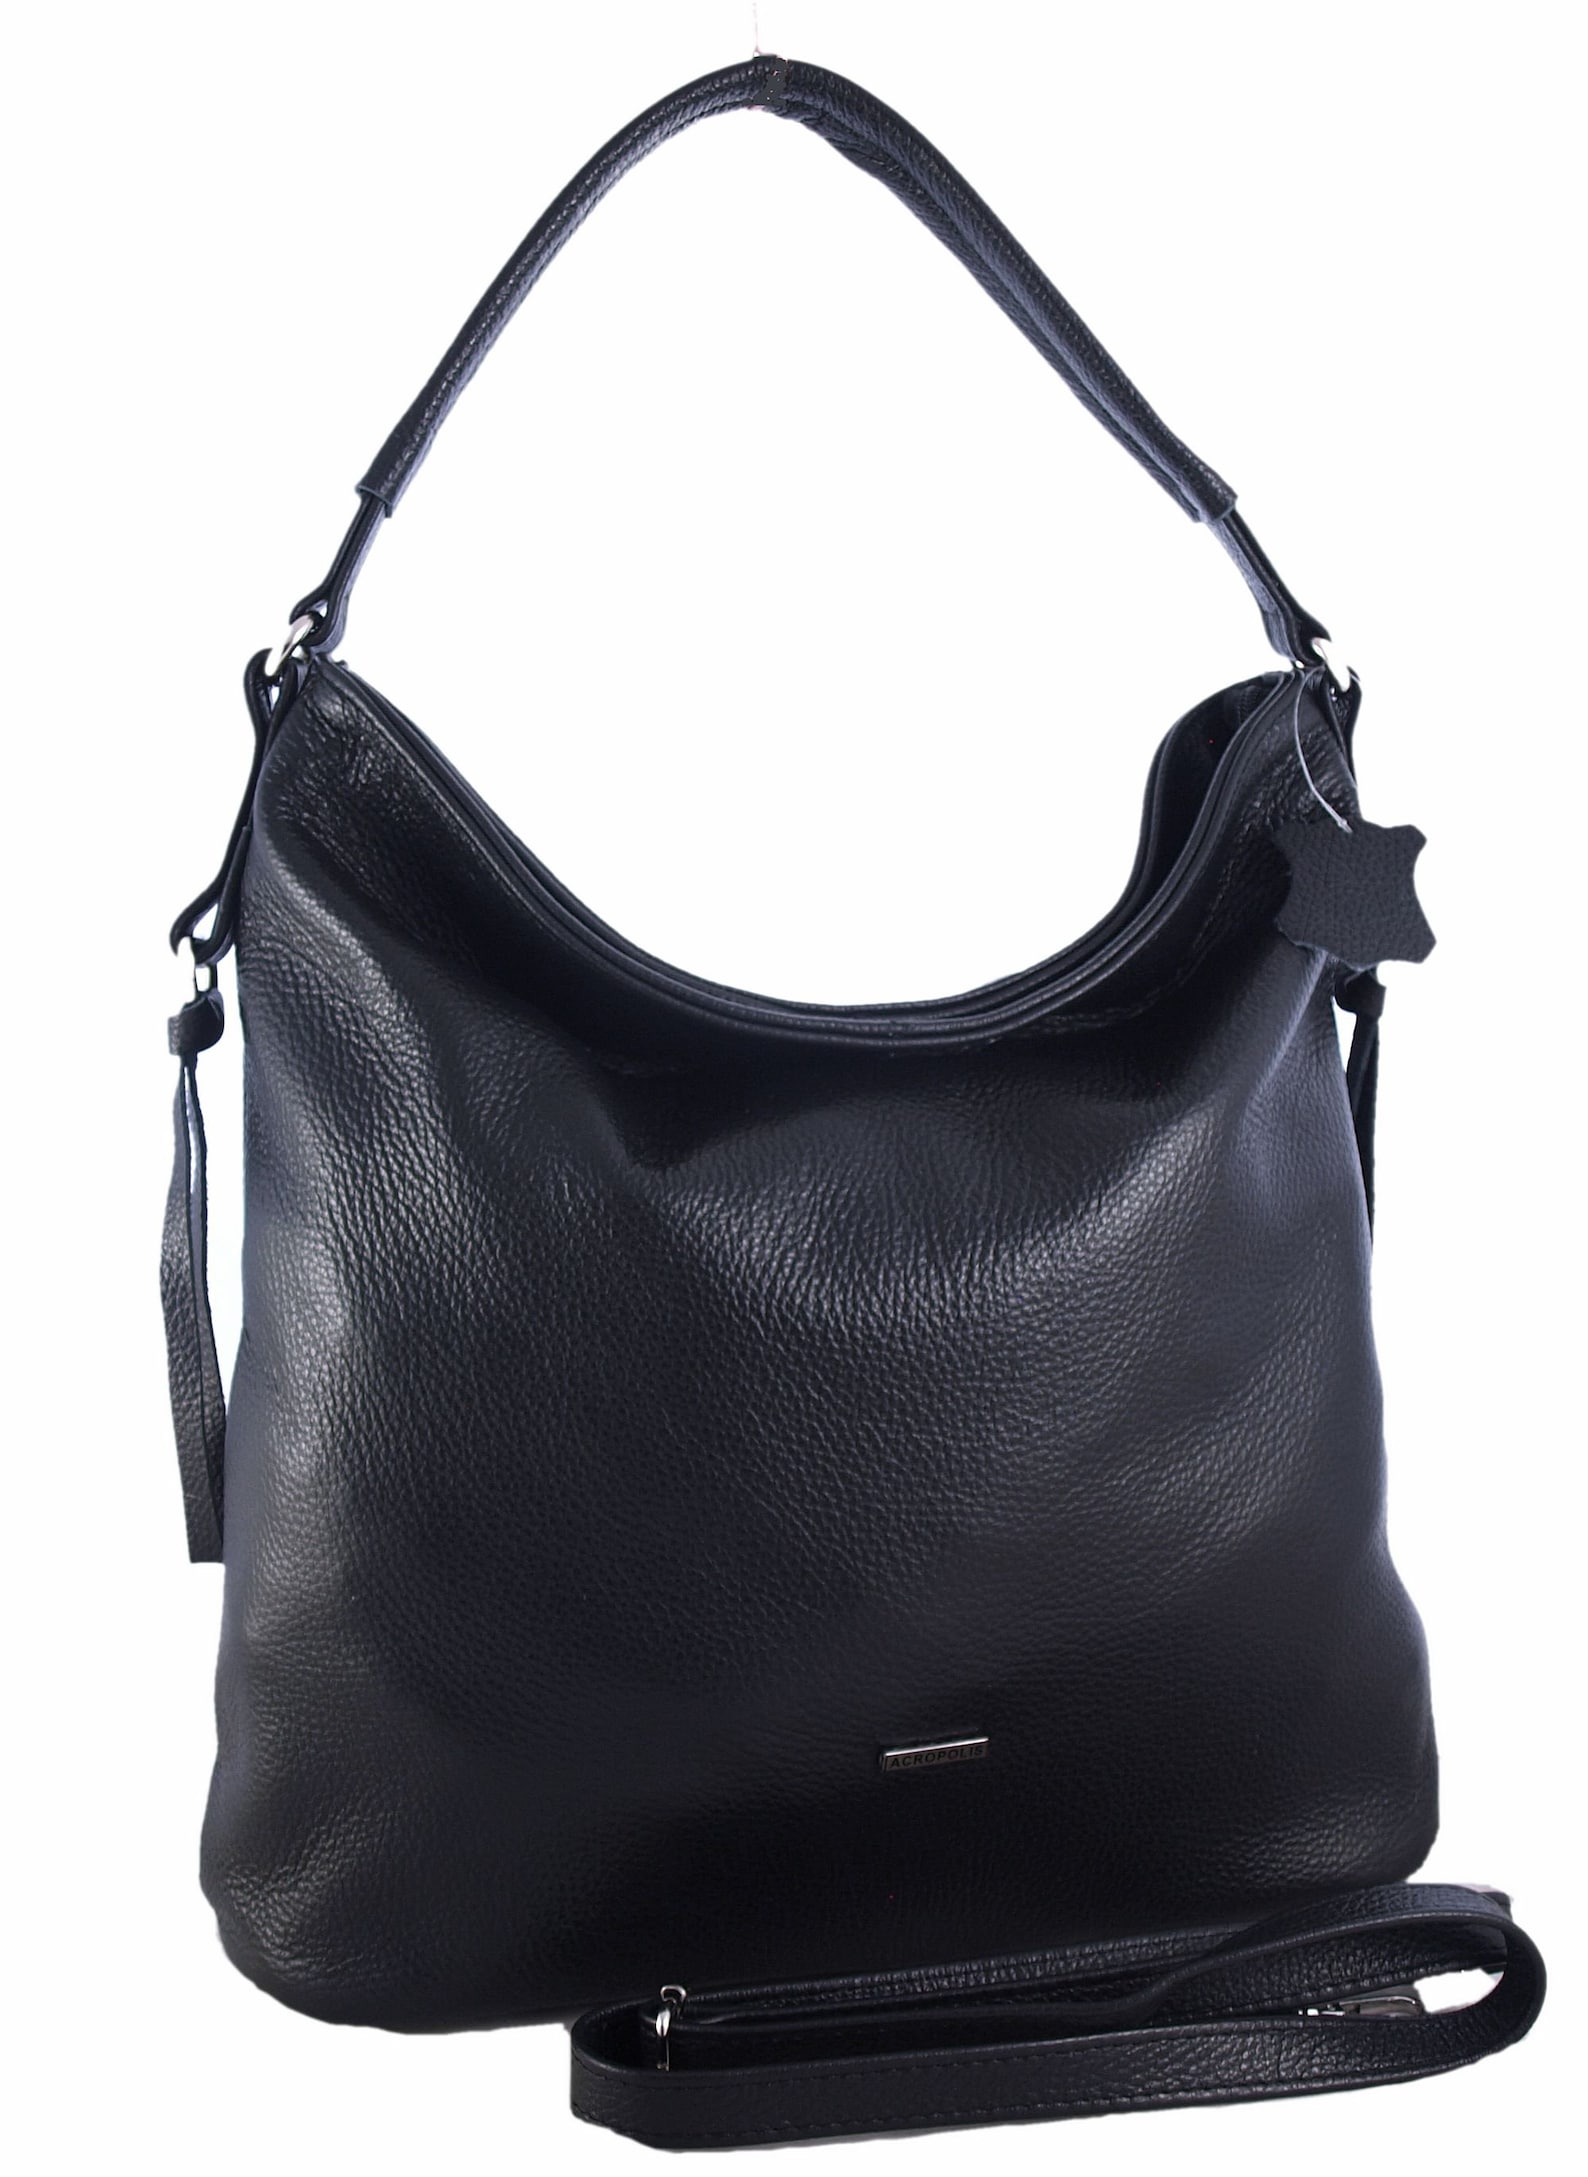 Black Leather Hobo Handbag Tote Bag With Crossbody Strap - Etsy